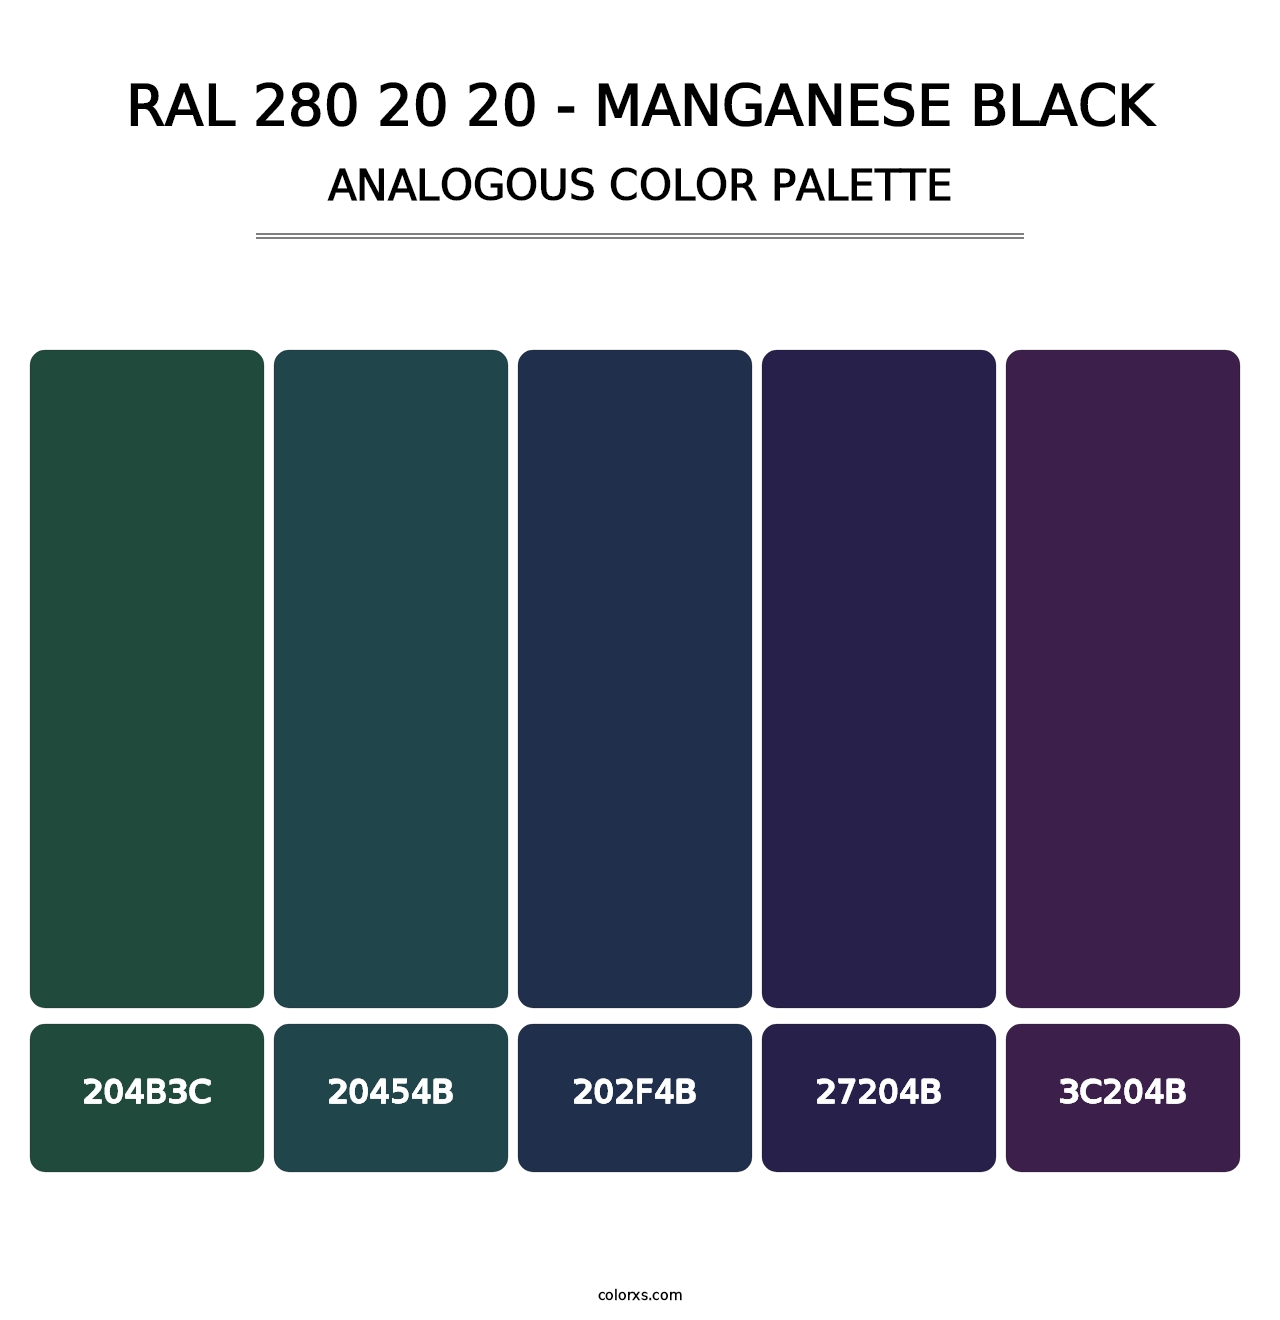 RAL 280 20 20 - Manganese Black - Analogous Color Palette